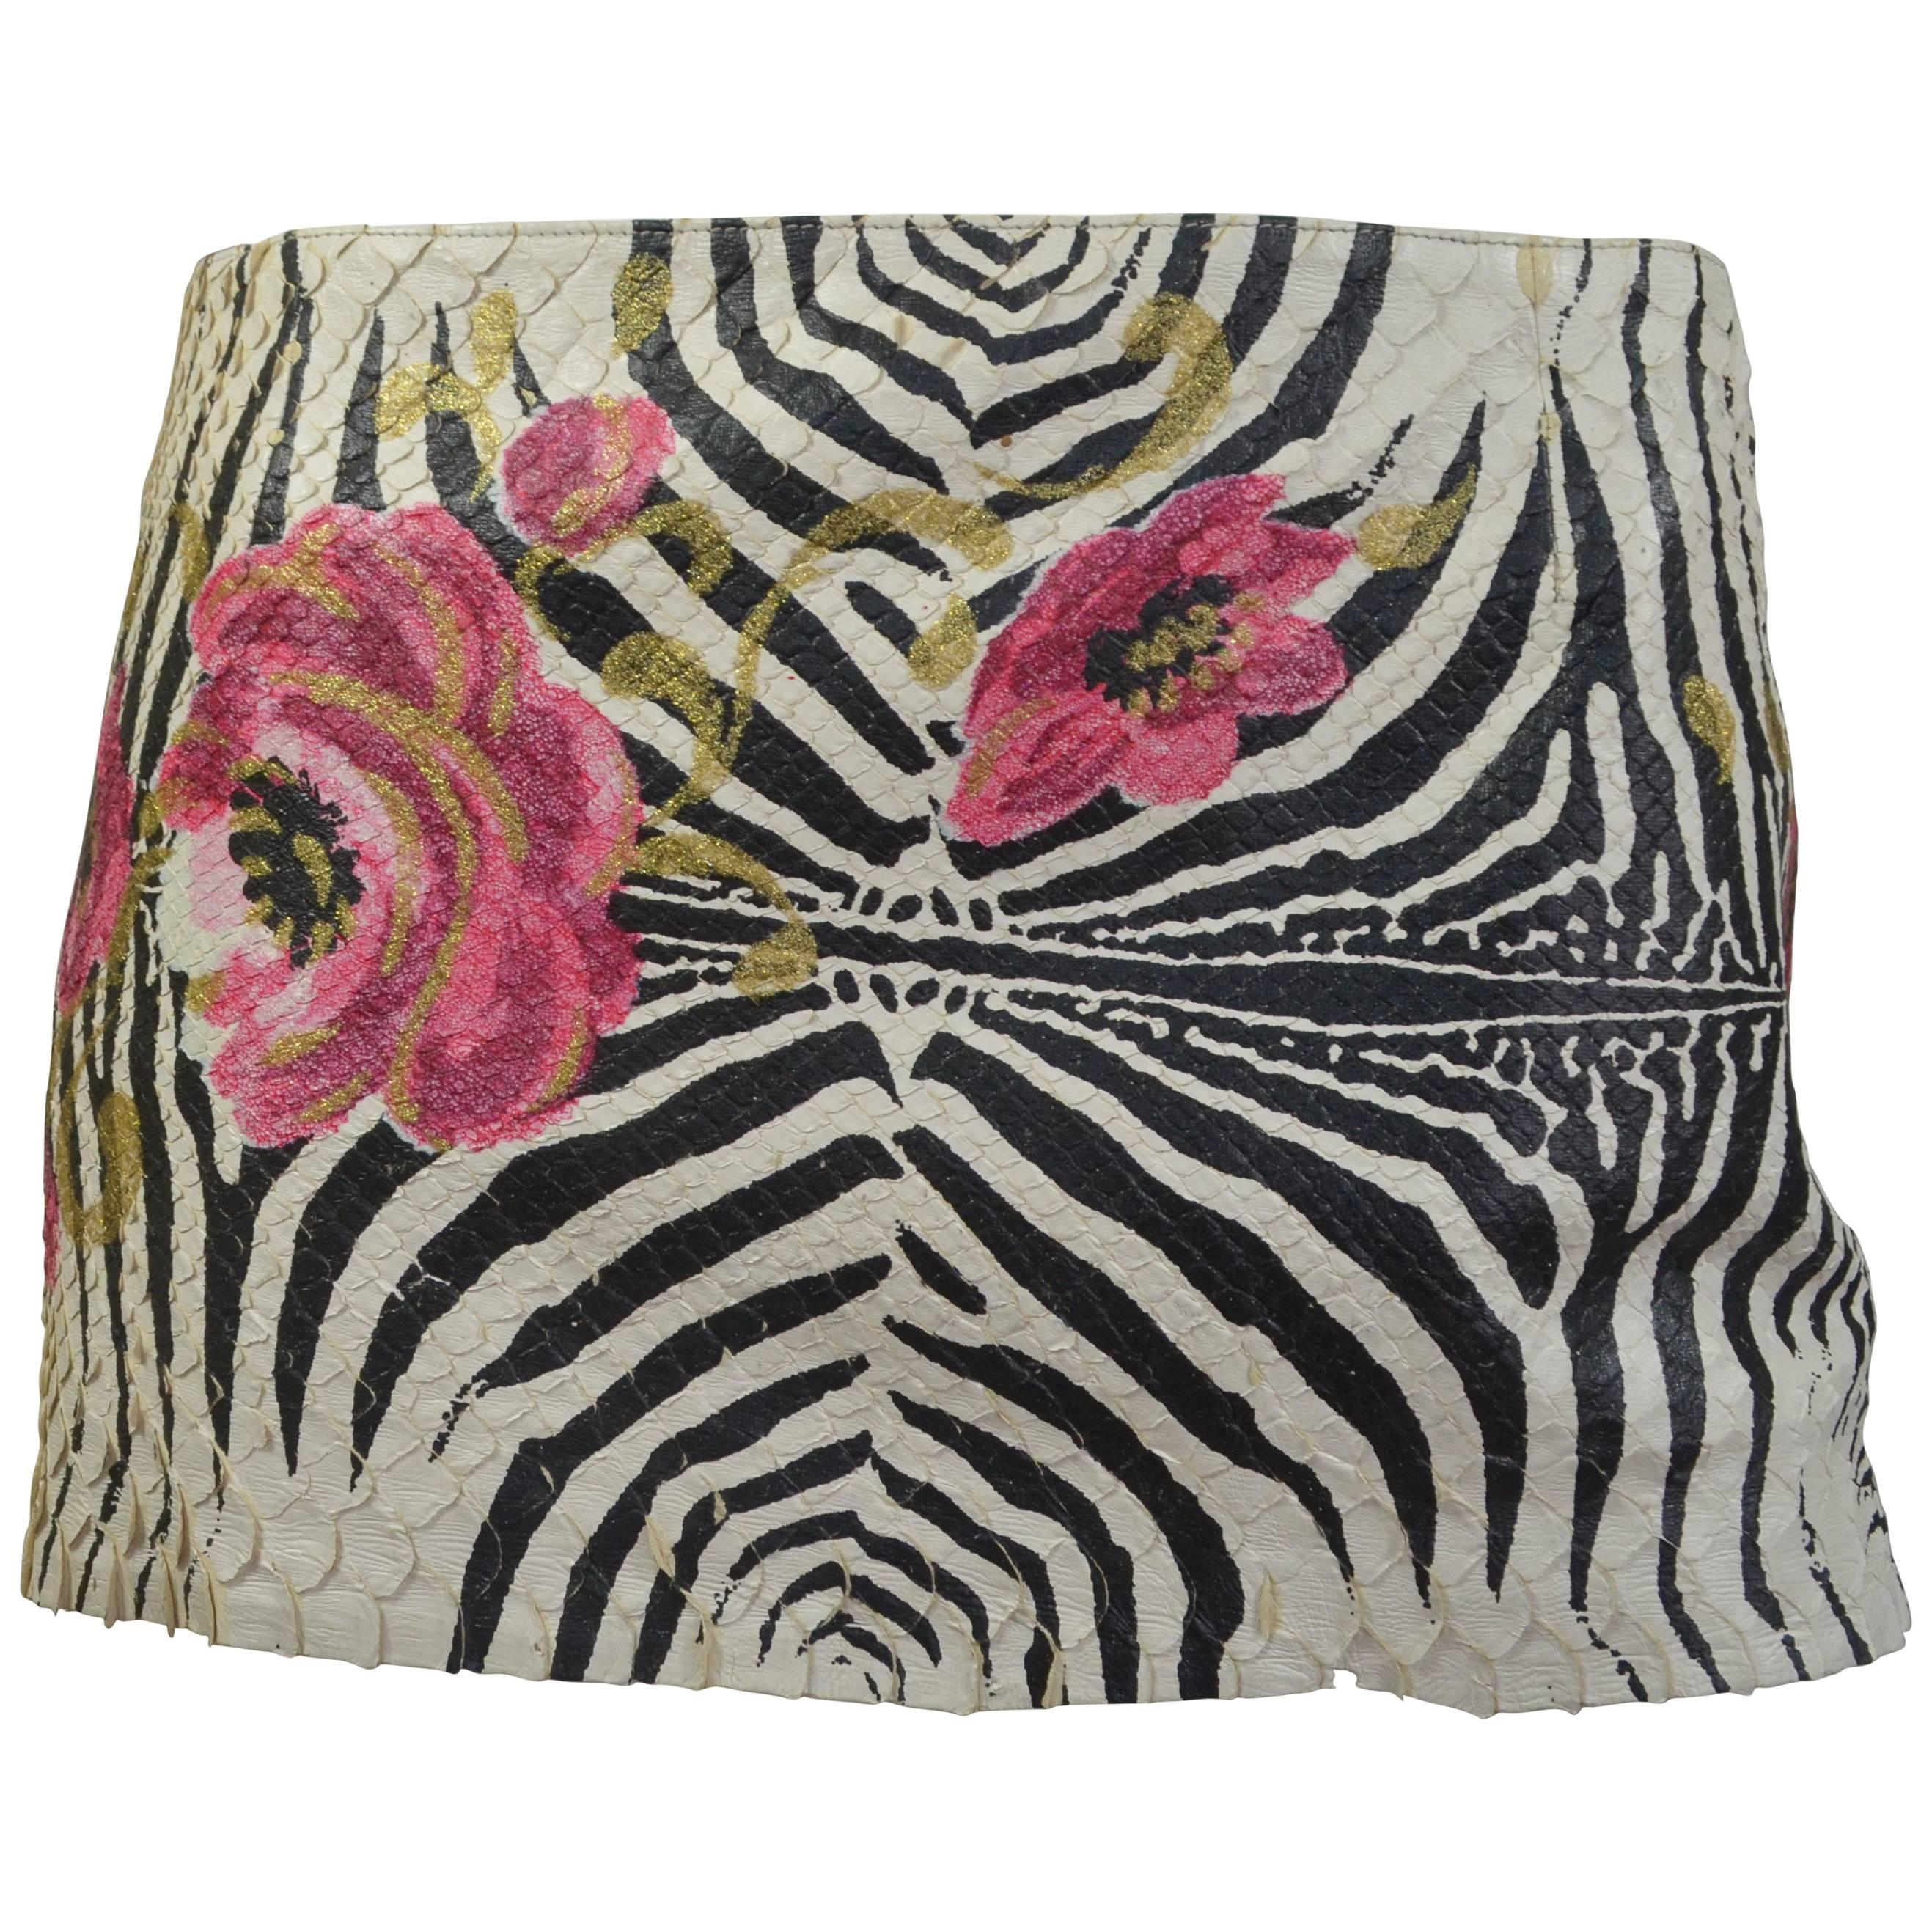 Roberto Cavalli Zebra Floral Painted Snakeskin Micro Mini Skirt 